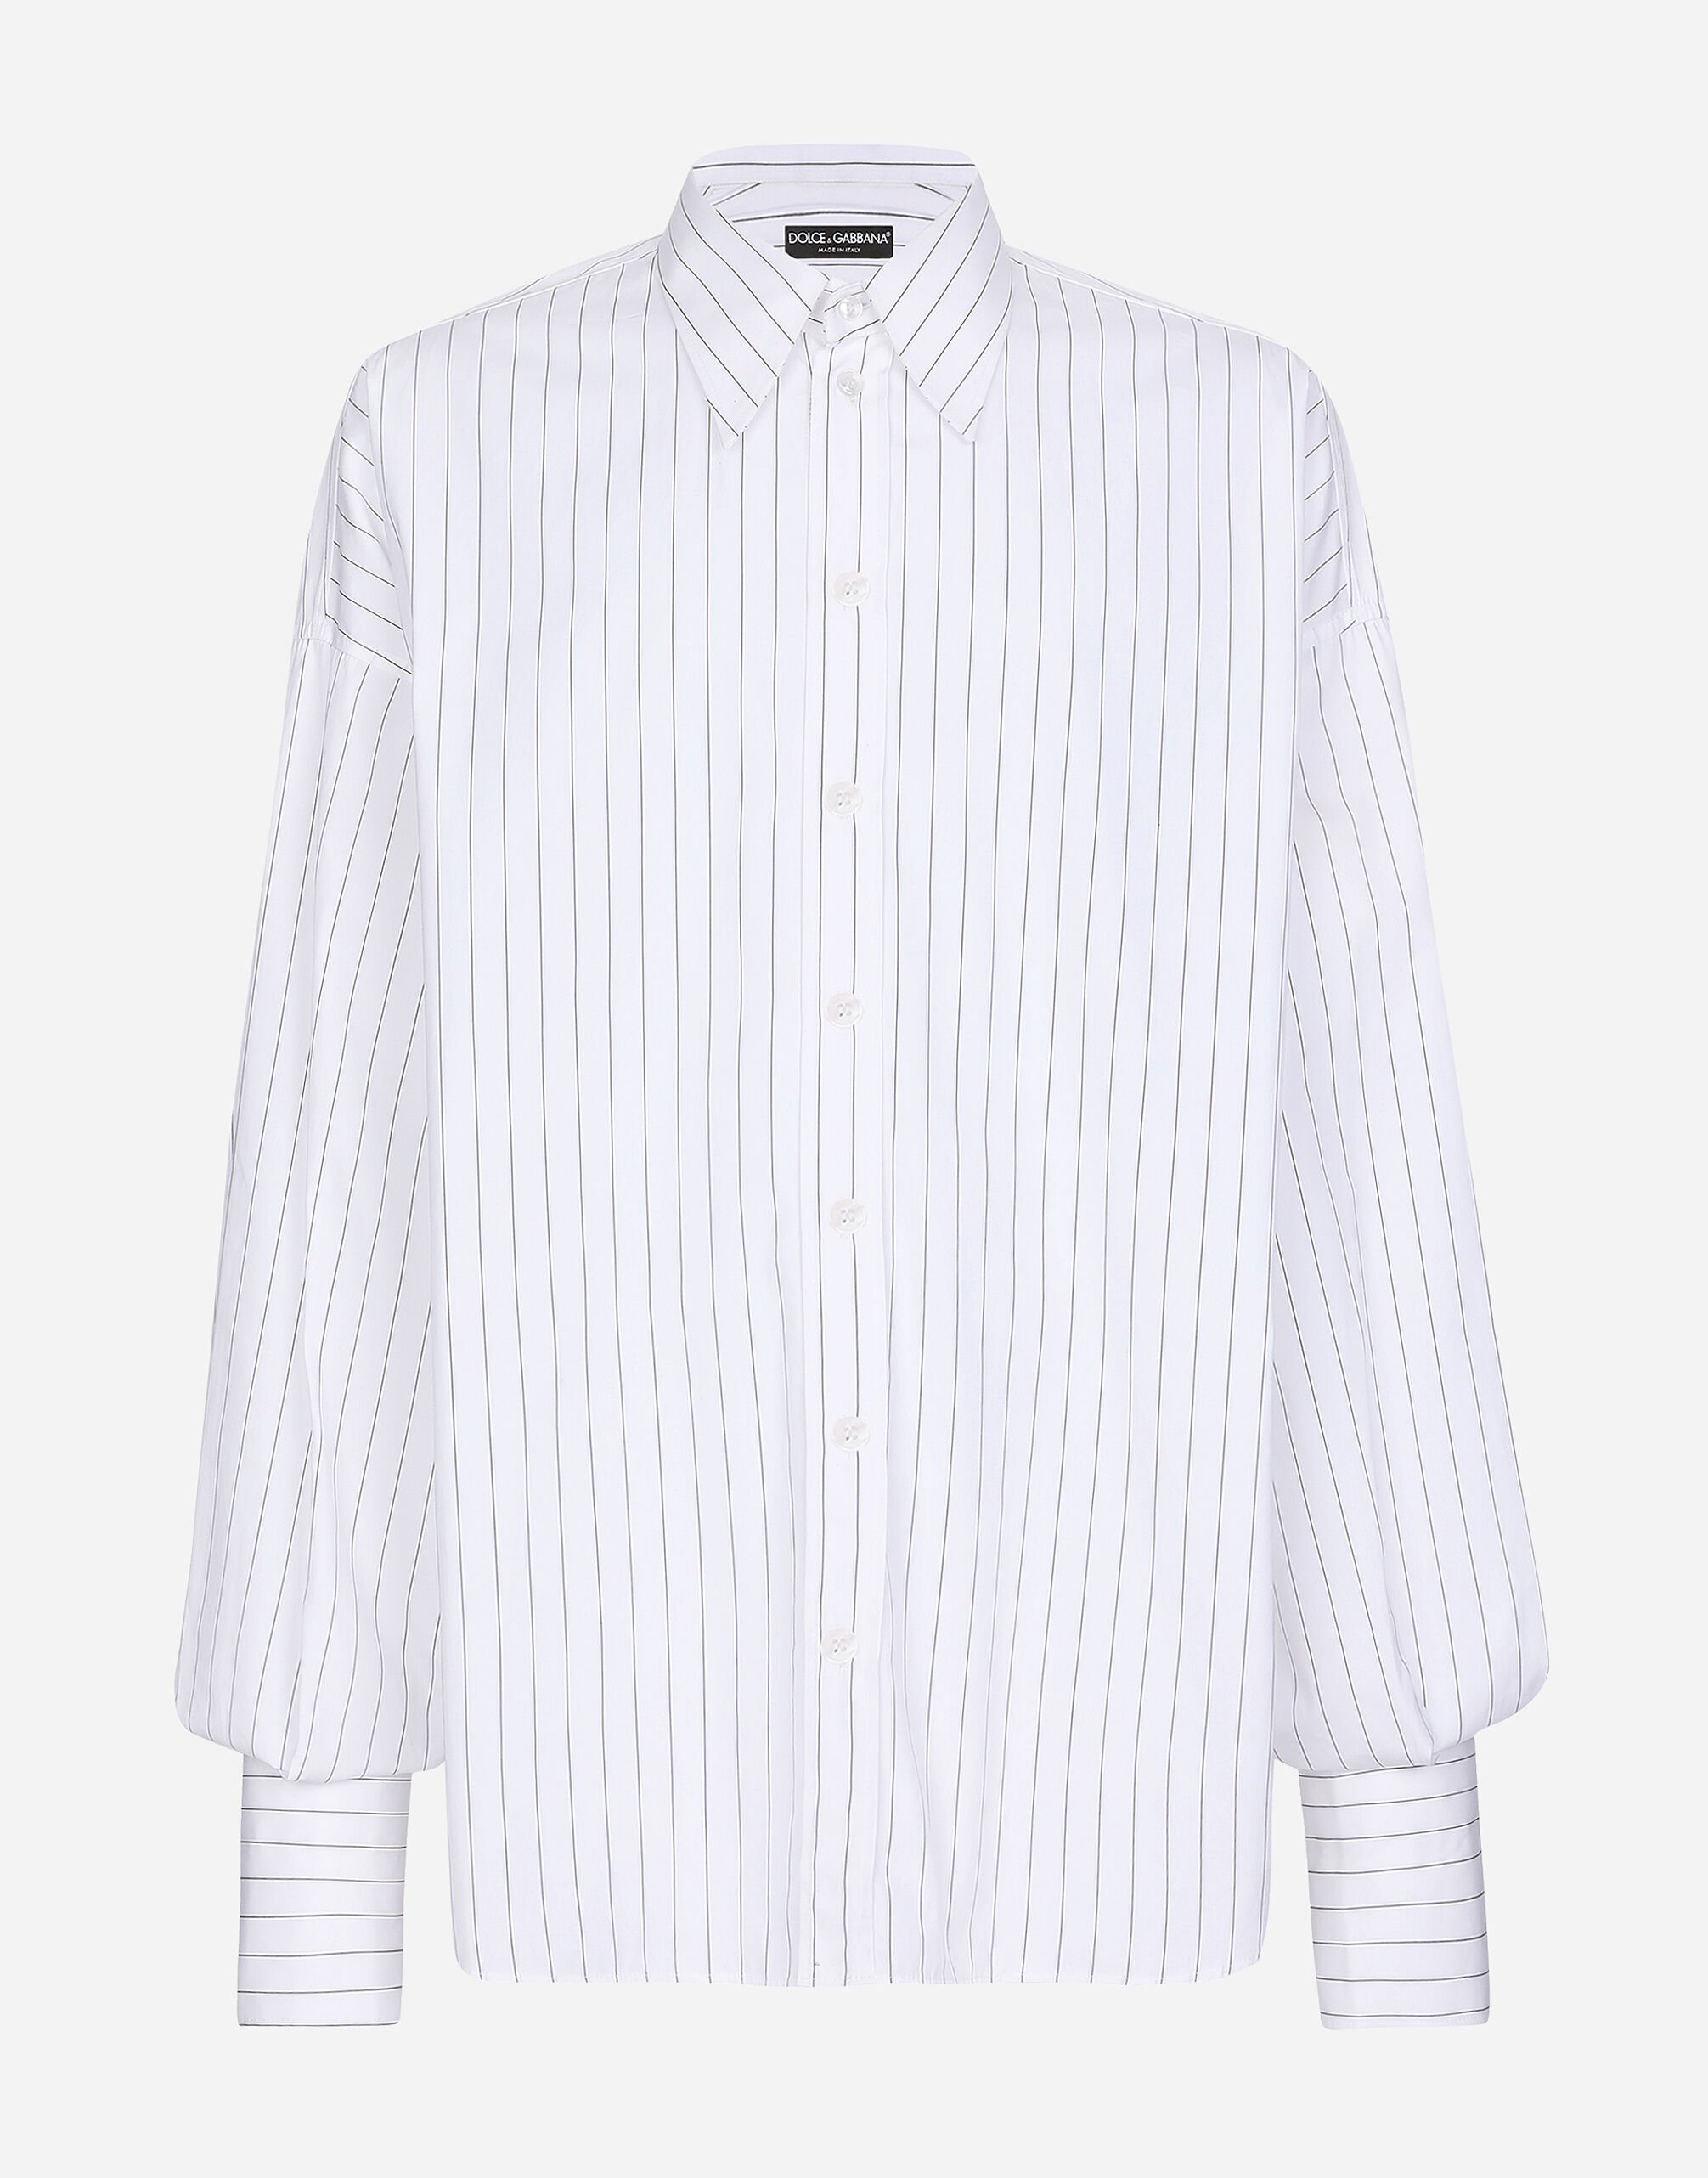 Dolce & Gabbana Super-oversize striped poplin shirt Brown G5LV4TFU1UQ